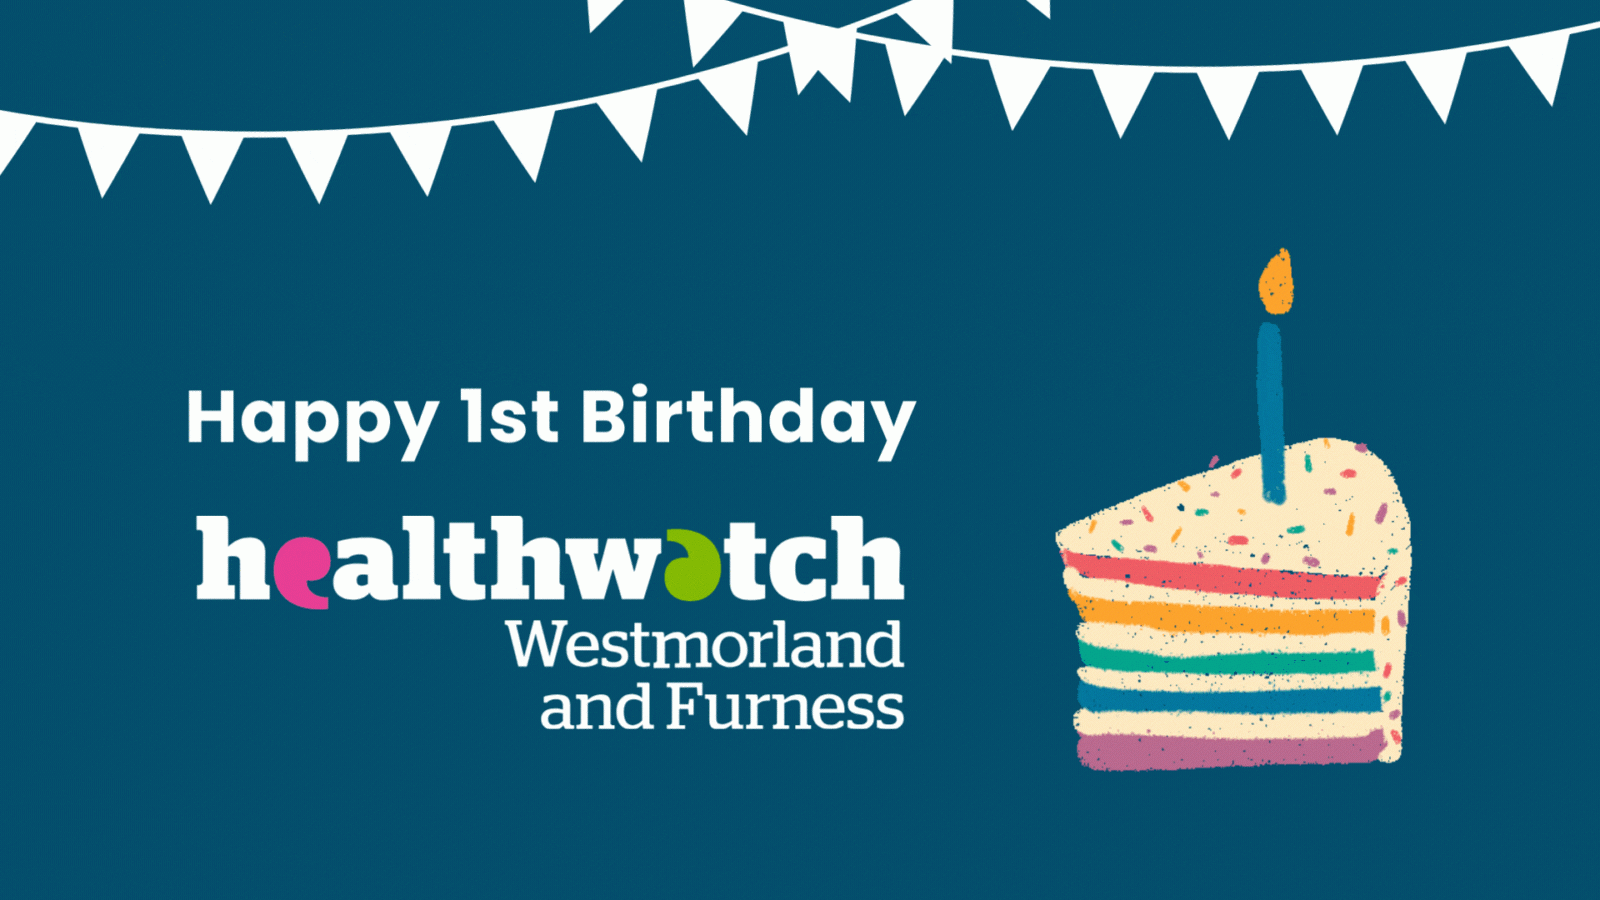 Happy 1st Birthday Healthwatch